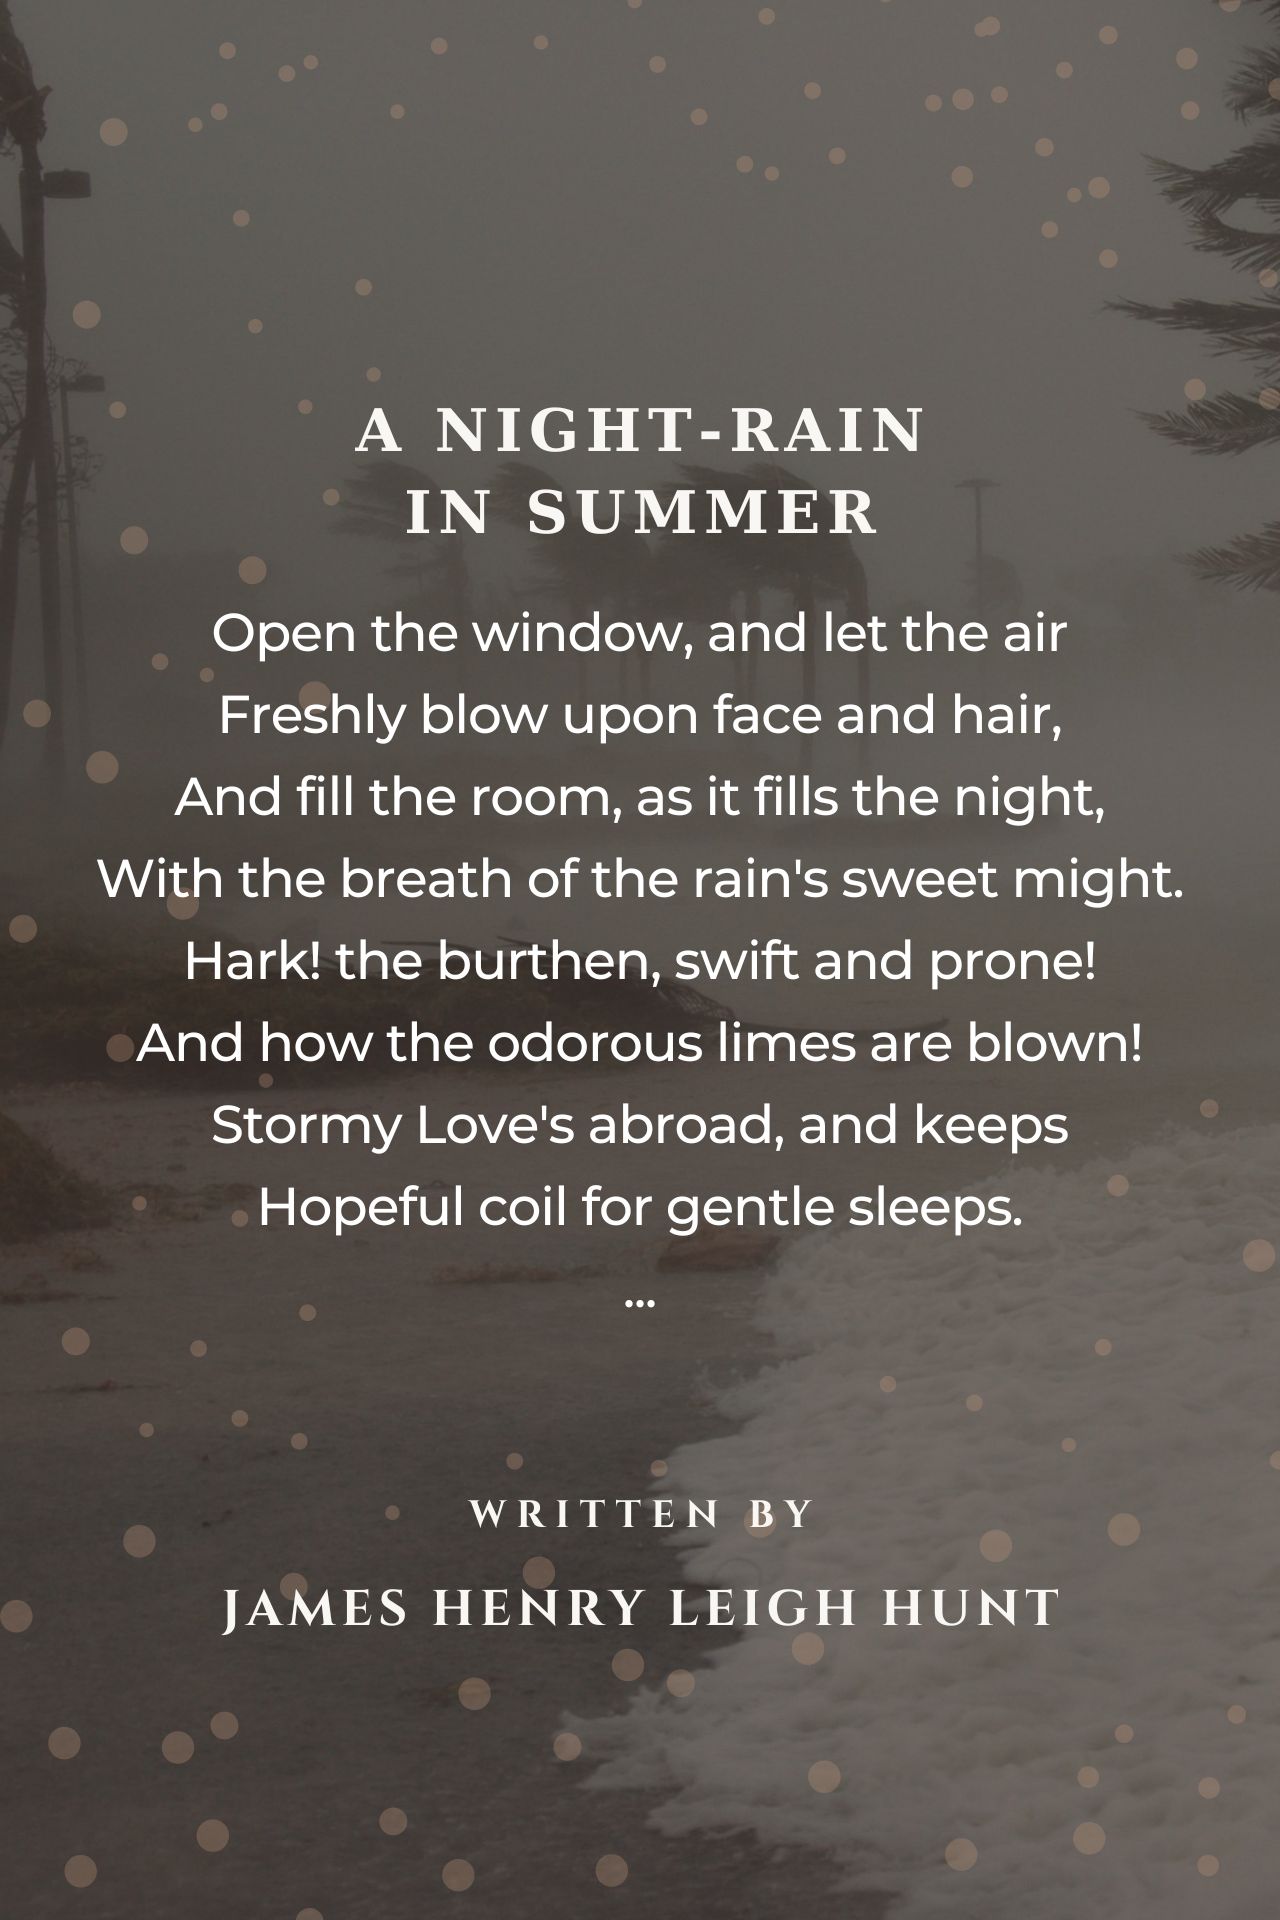 A Night-Rain In Summer